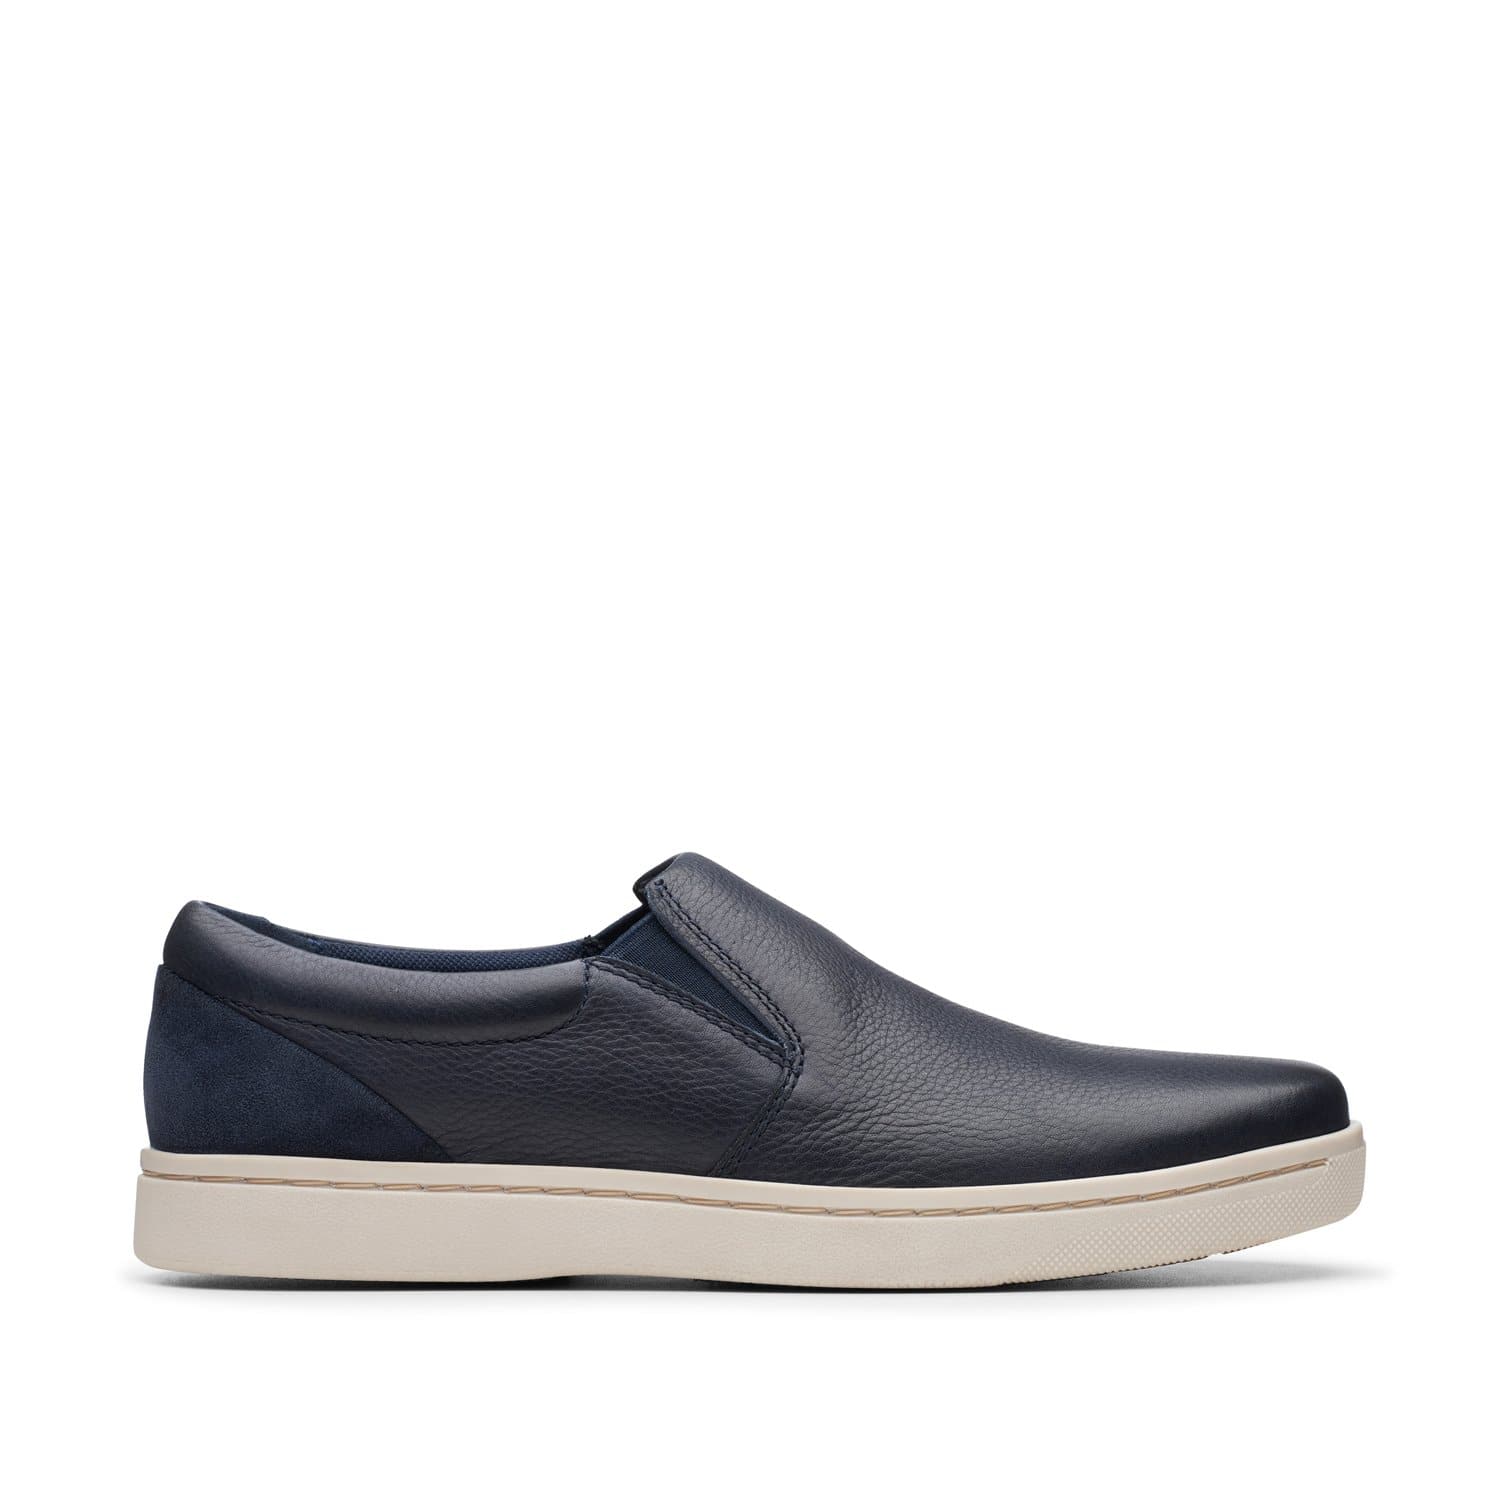 Clarks-Kitna-Free-Men's-Shoes-Navy-Leather-26144763